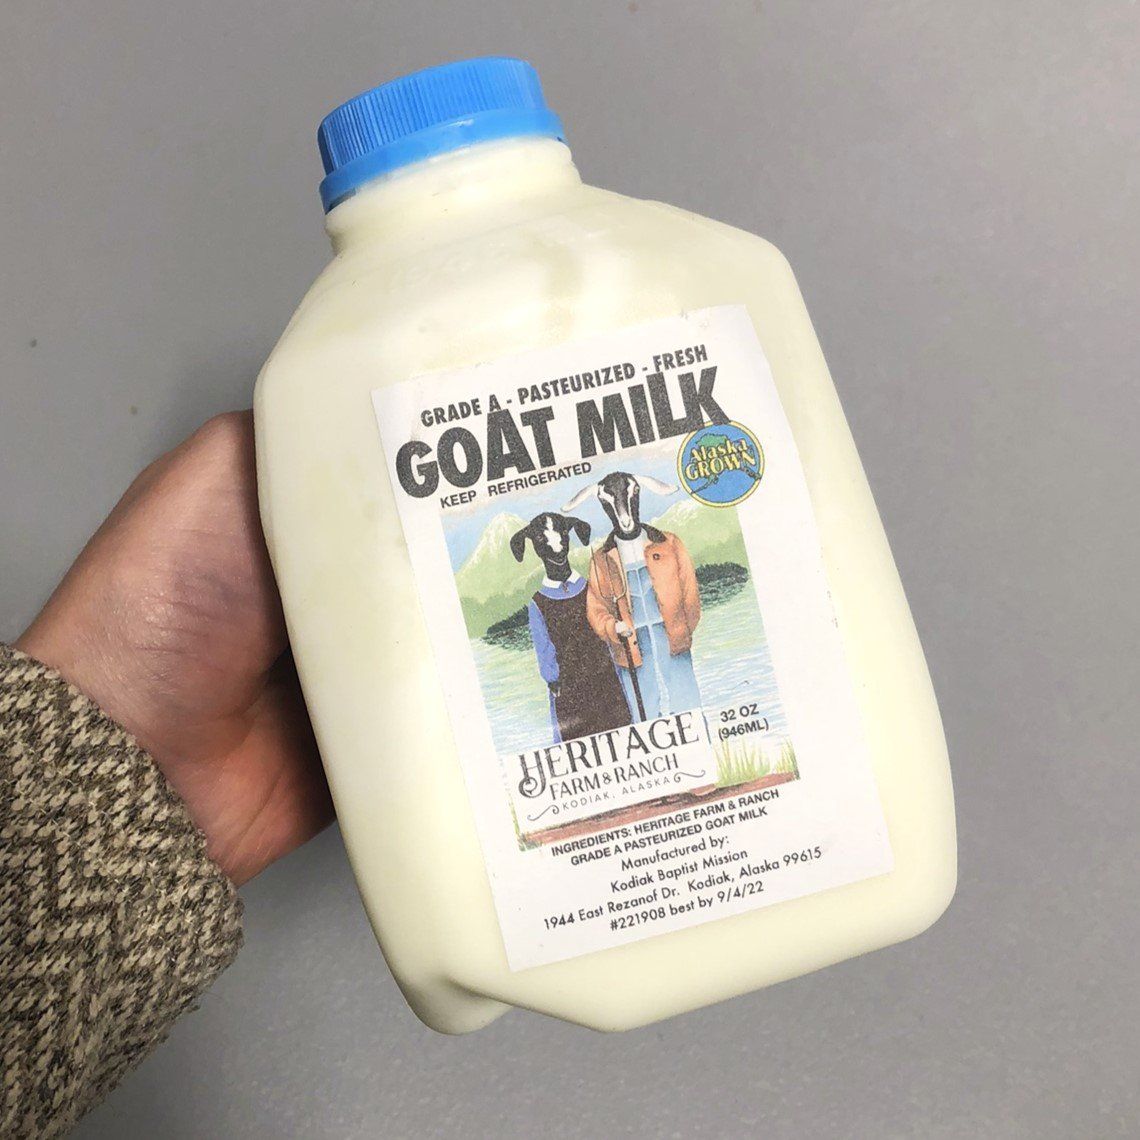 Previous Happening: Goat Milk